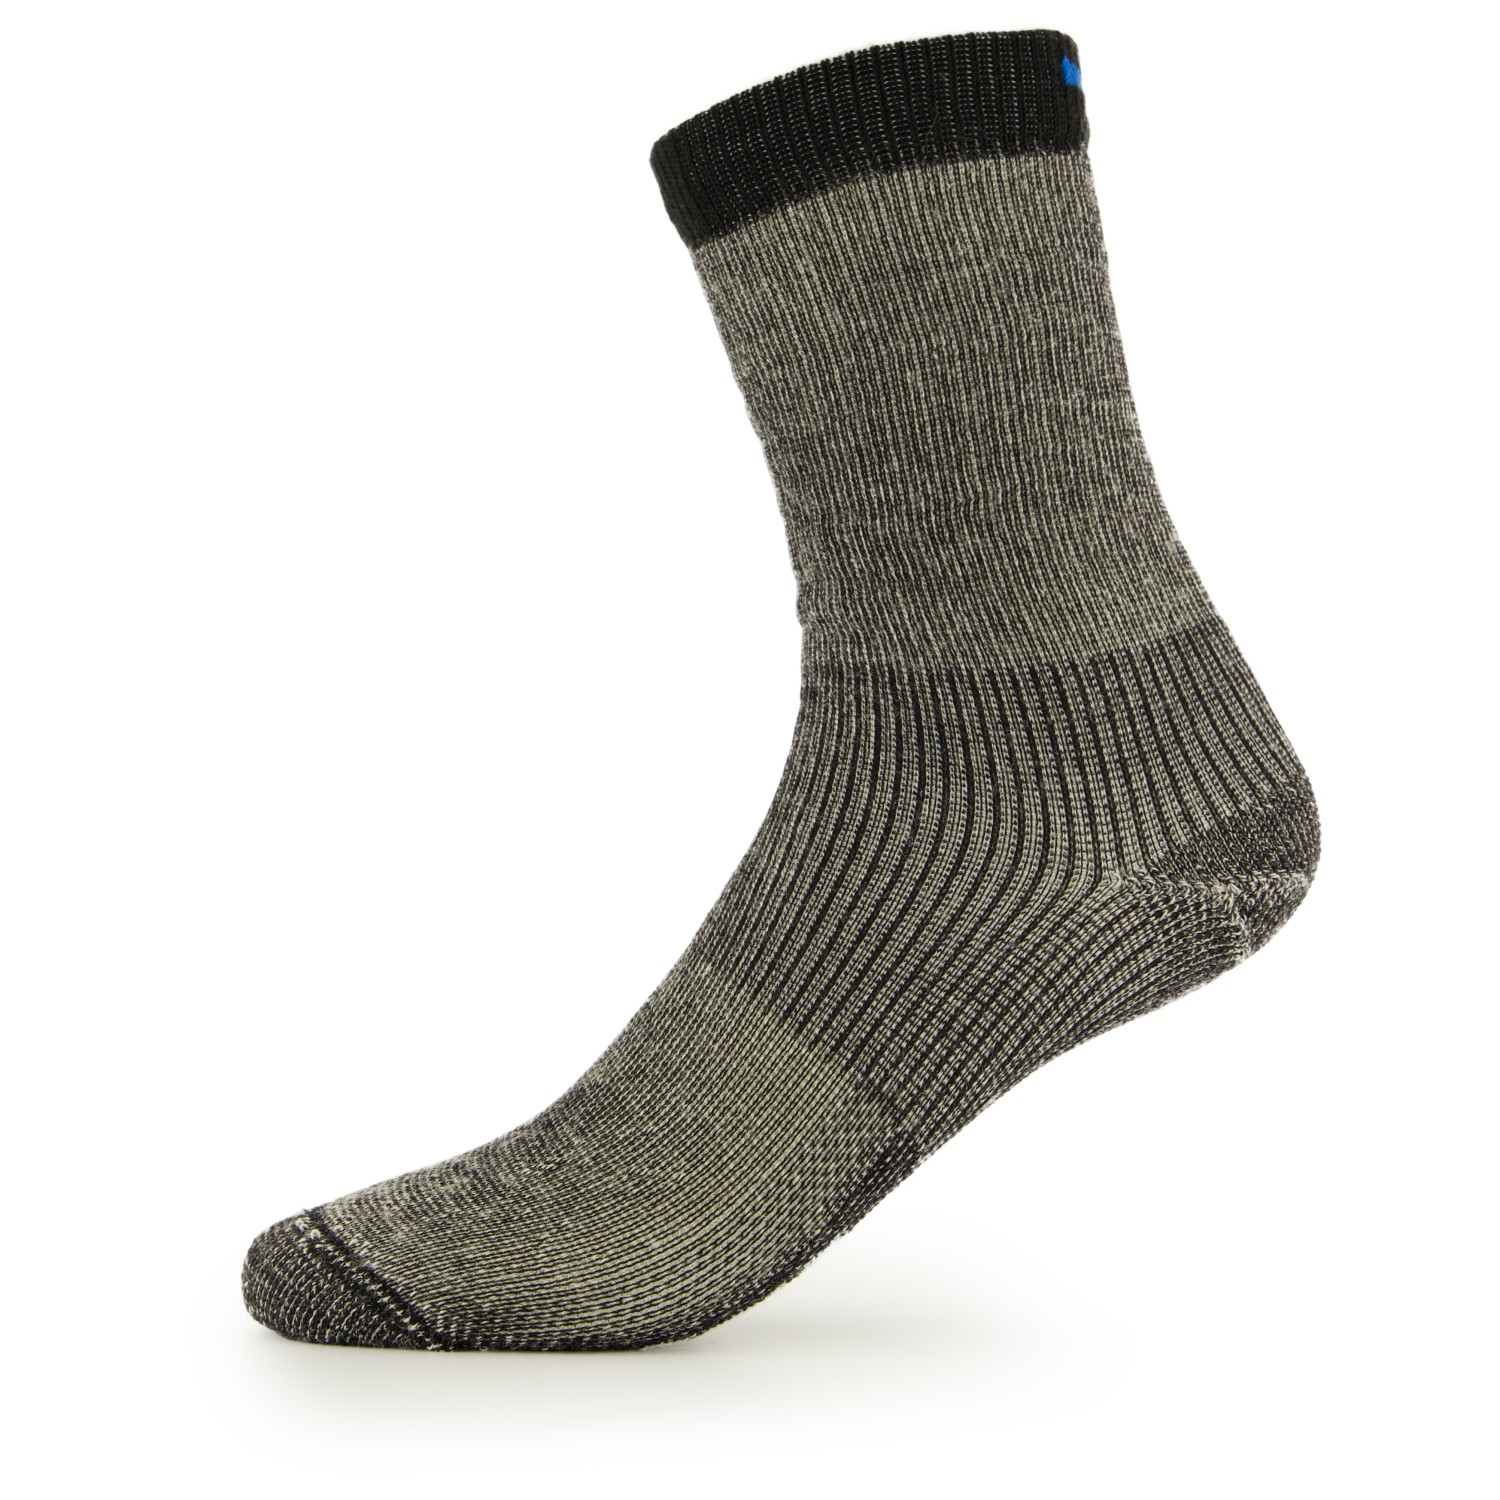 Походные носки Stoic Merino Wool Cushion Heavy Socks, черный men wool merino socks for winter thermal warm thick hiking boot heavy soft cozy socks for cold weather 5 pack